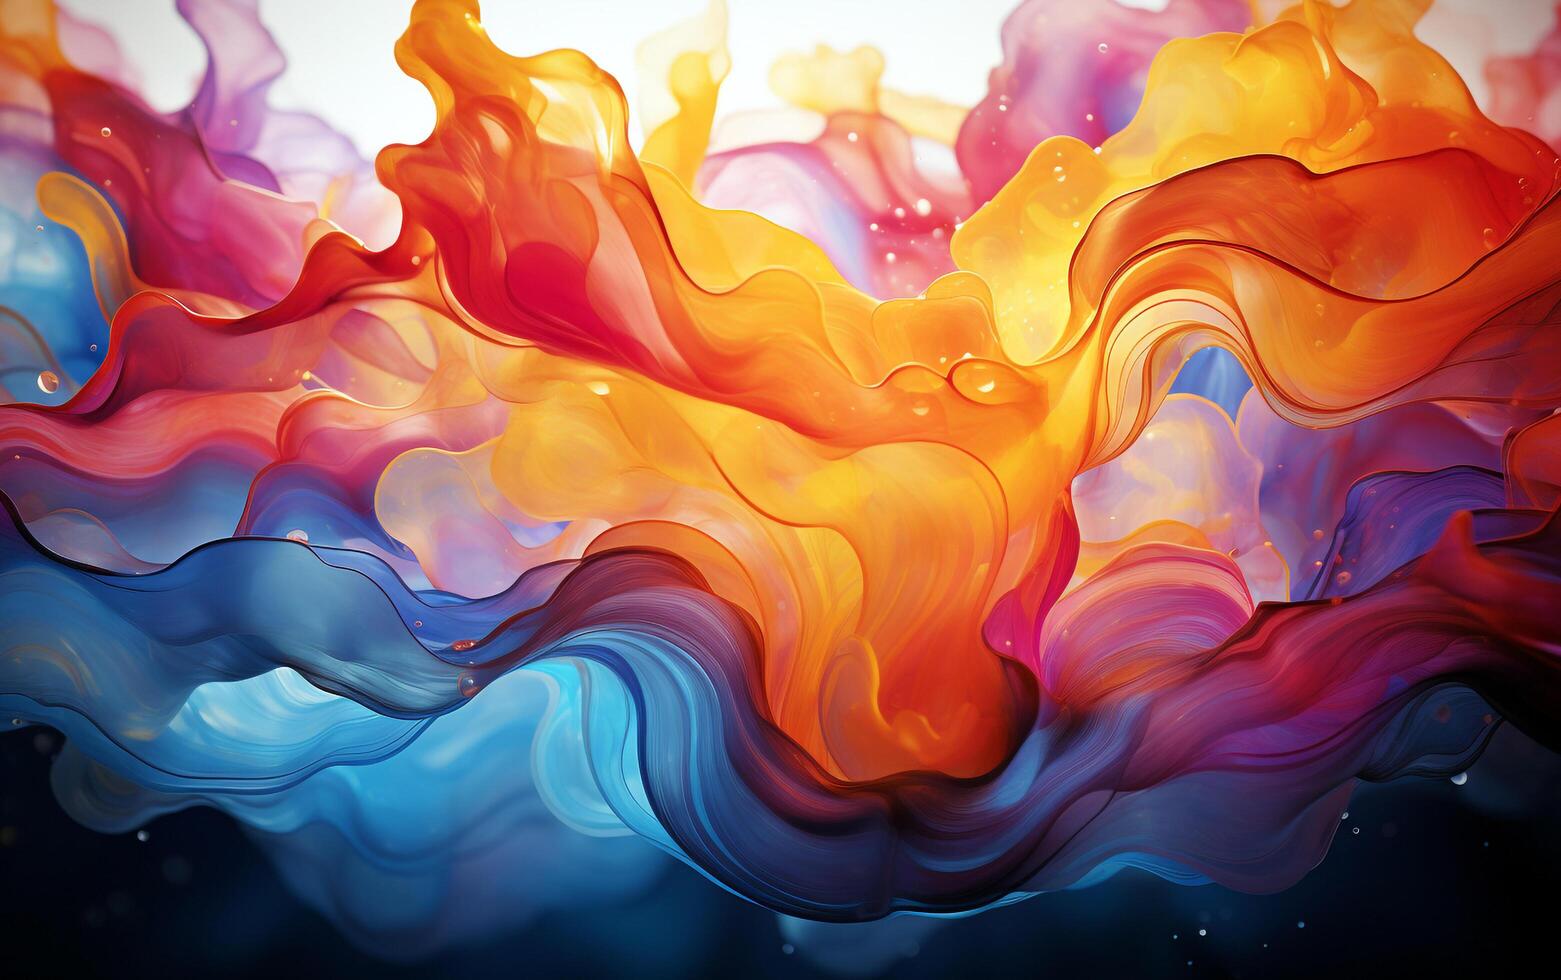 suave e etéreo nuvens abstrato colorida fundo foto